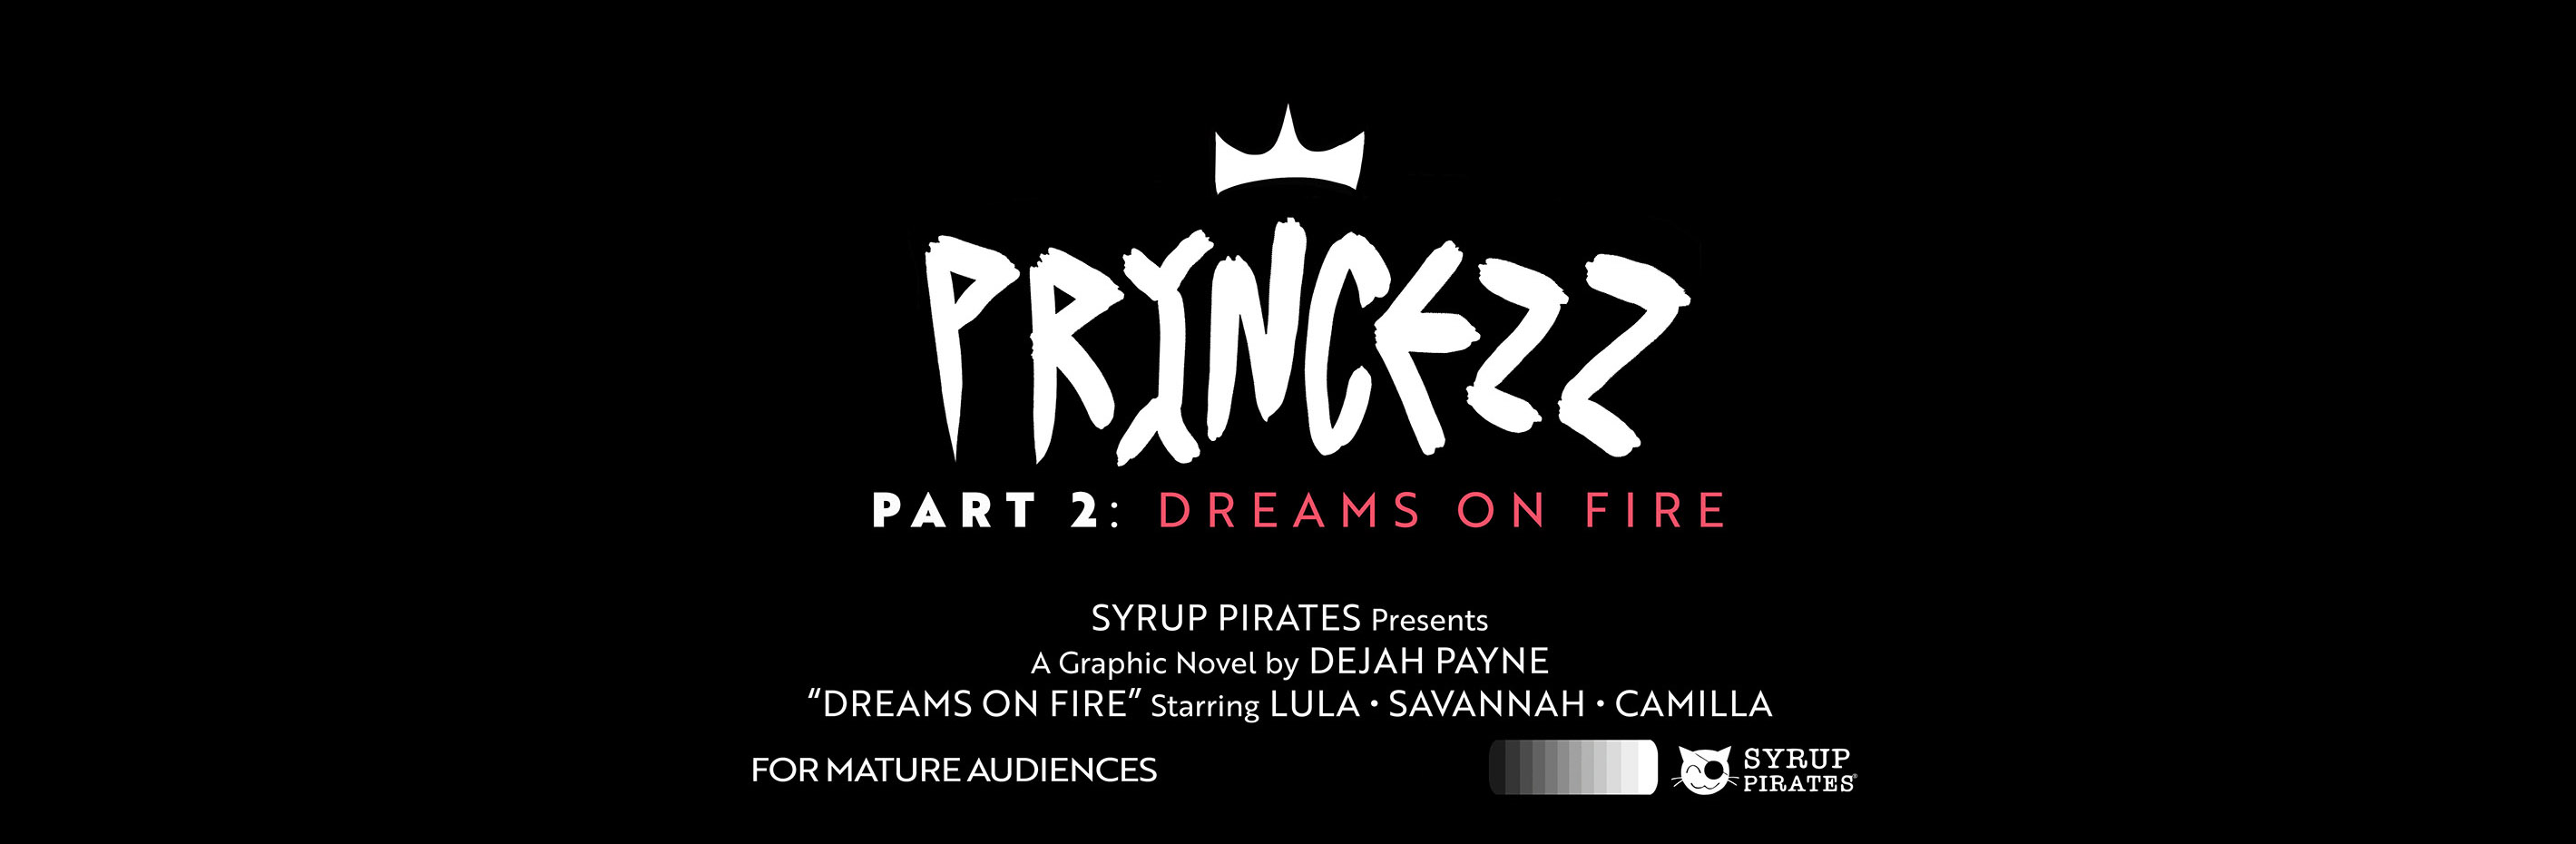 Princezz Part 2: Dreams On Fire